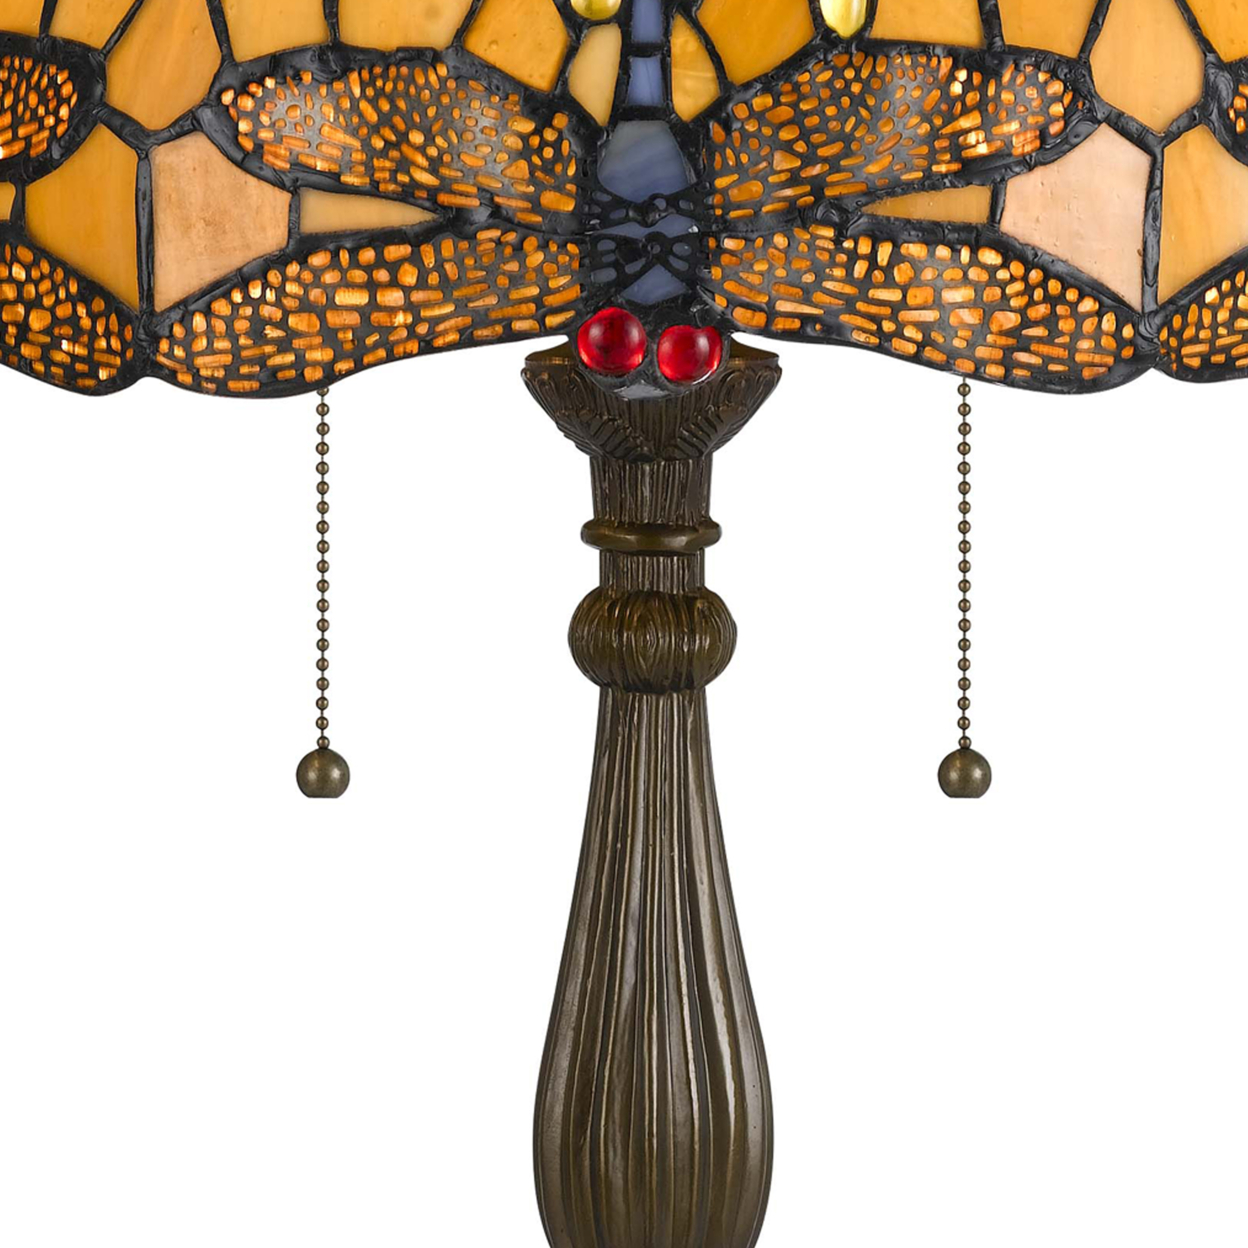 2 Bulb Tiffany Table Lamp With Dragonfly Design Shade, Multicolor- Saltoro Sherpi